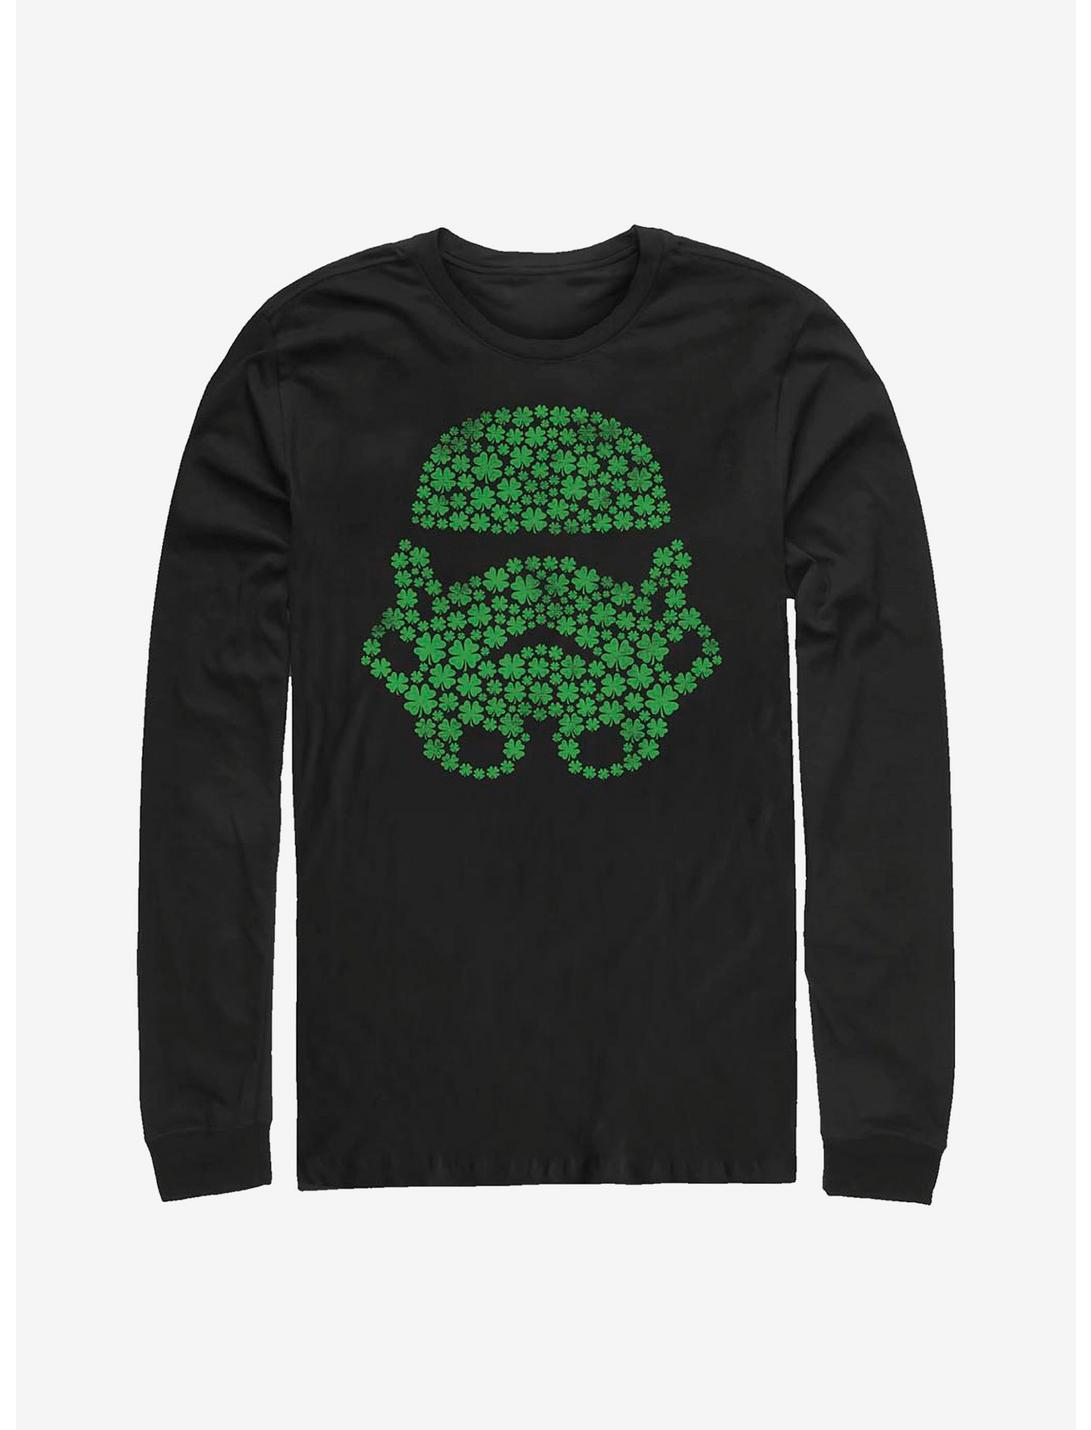 Star Wars Clover Field Long-Sleeve T-Shirt, BLACK, hi-res